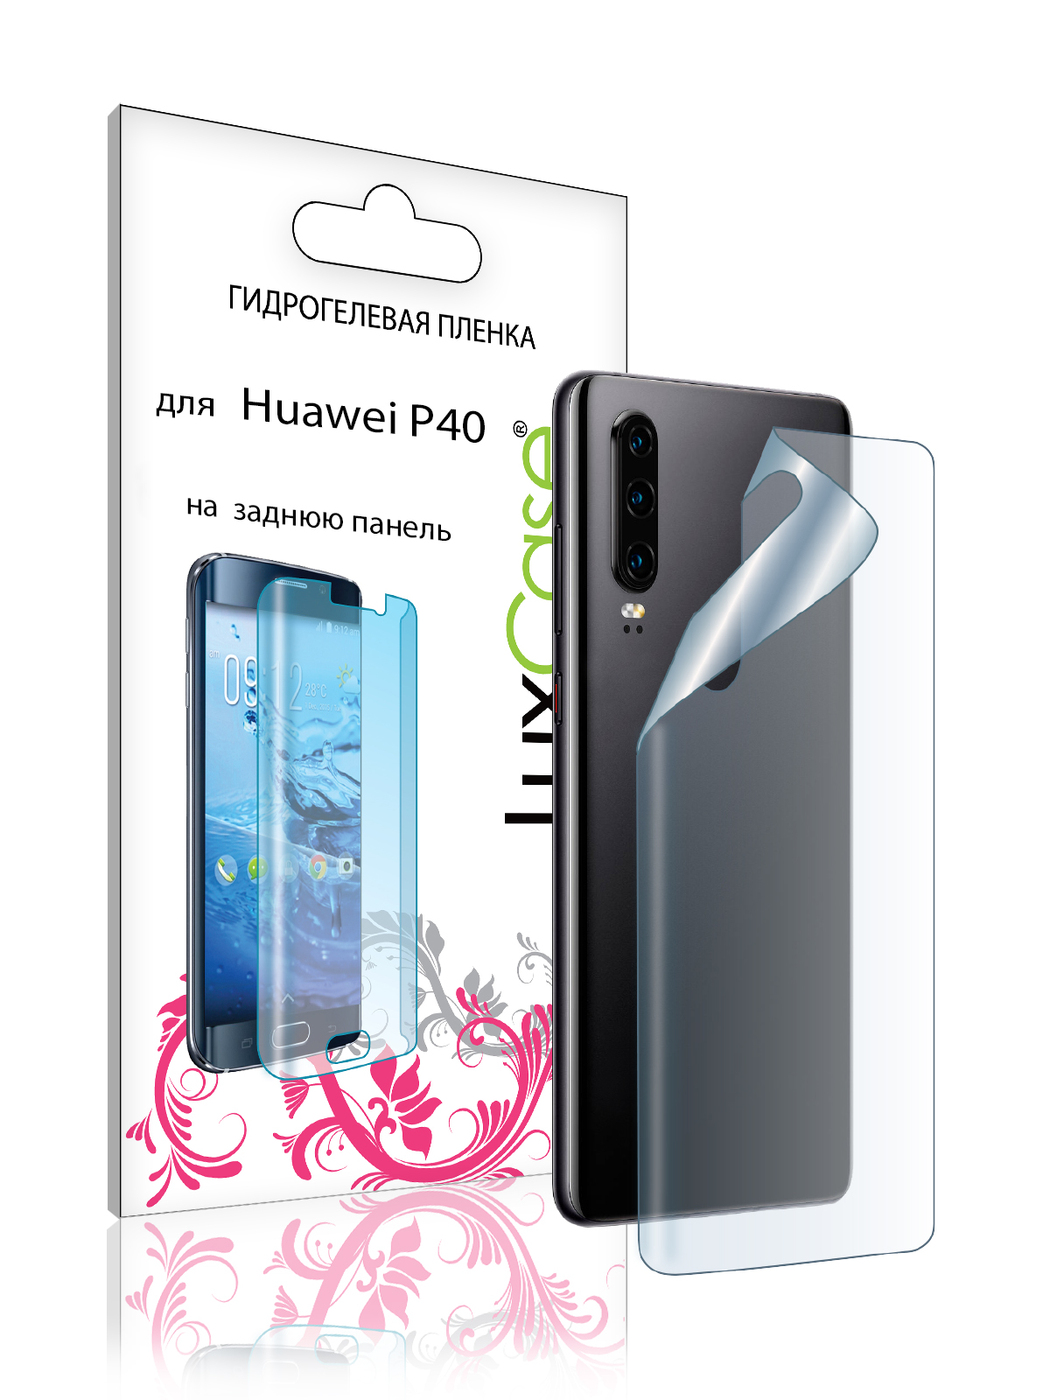 Защита задней крышки LuxCase для Huawei P40 пленка 0.14mm Transparent 86029 защитная пленка luxcase для huawei p40 back 0 14mm transparent 86029